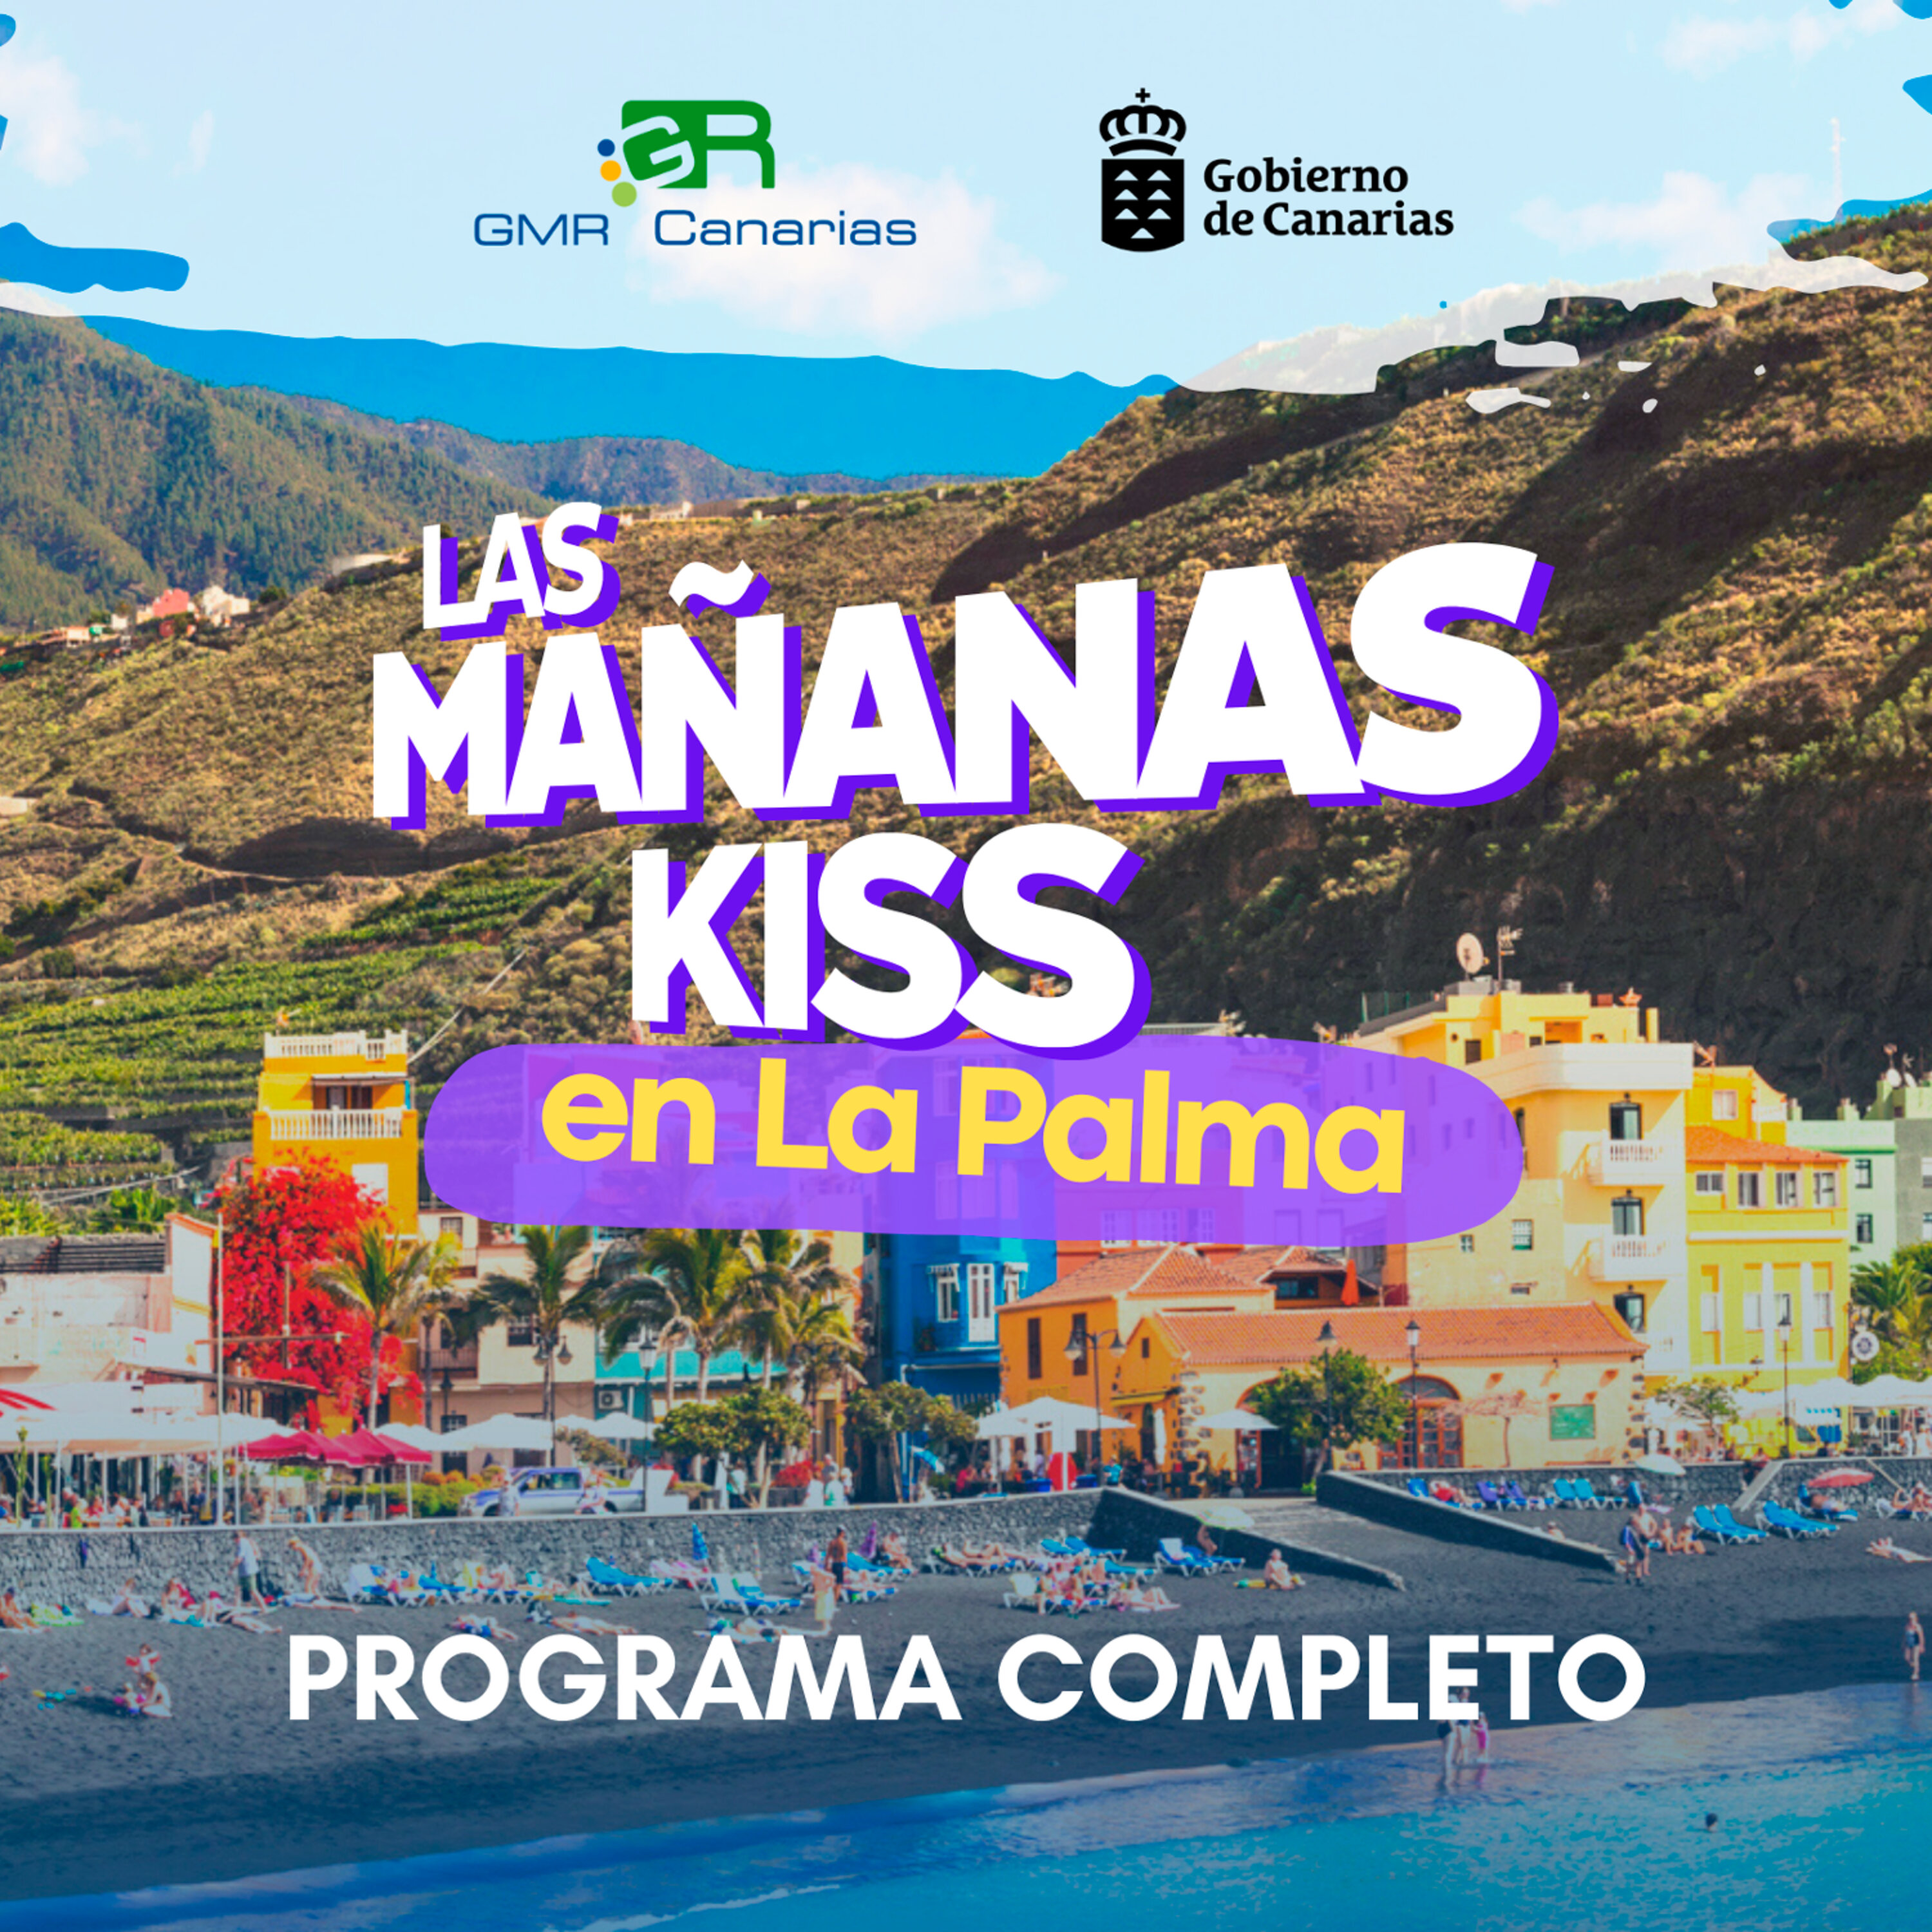 Las Mañanas Kiss desde La Palma (01/04/2022 – 09-10h)